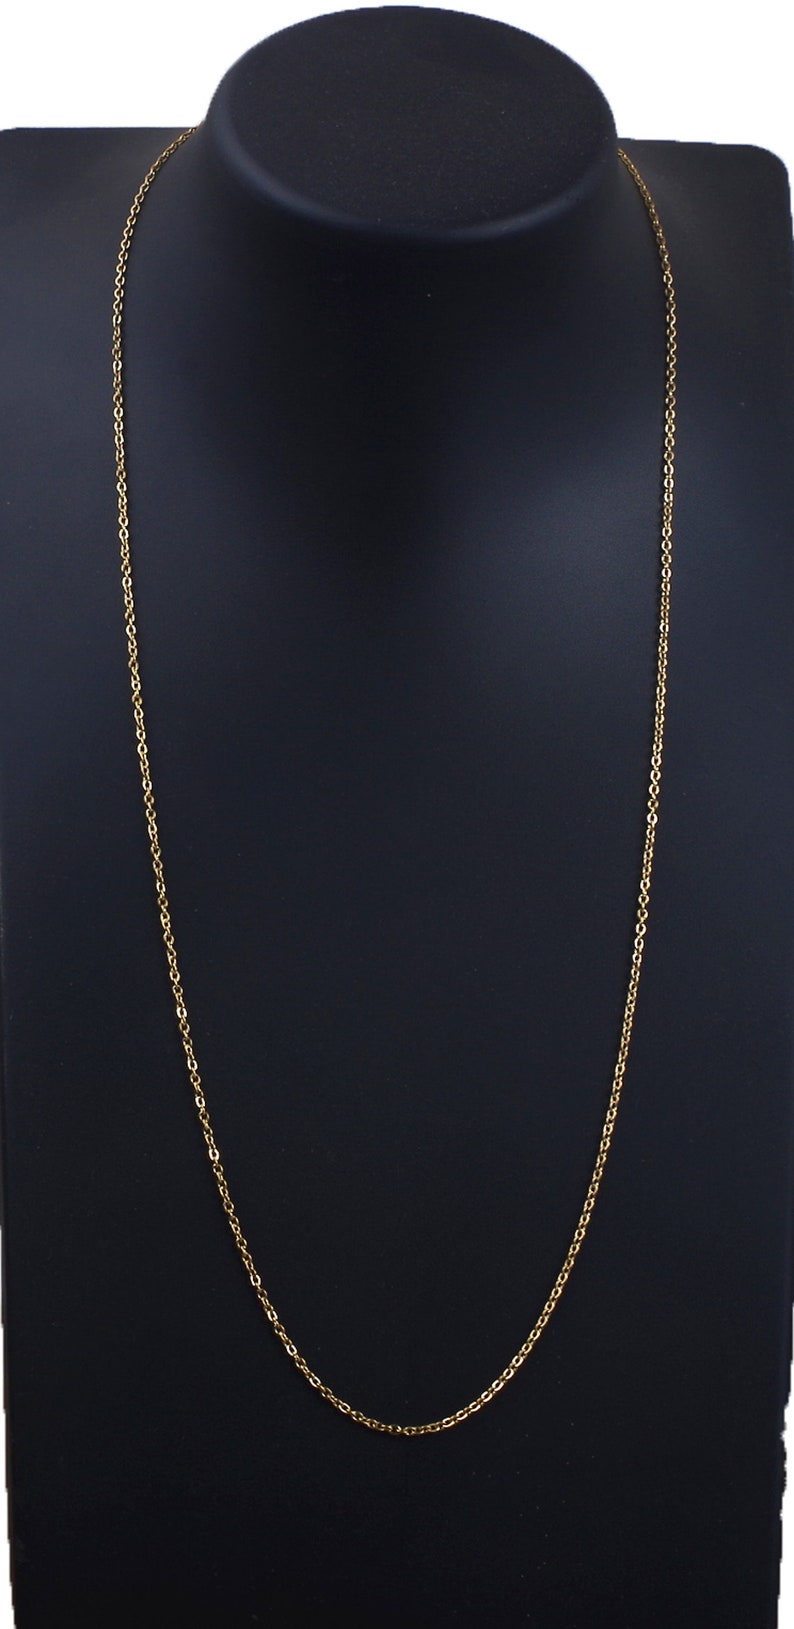 Necklace chain for pendant 40 cm, 50 cm, 60 cm, 70 cm, 75 cm, 80 cm, 85 cm, 90 cm, 95 cm in gold-plated anti-allergic stainless steel image 5